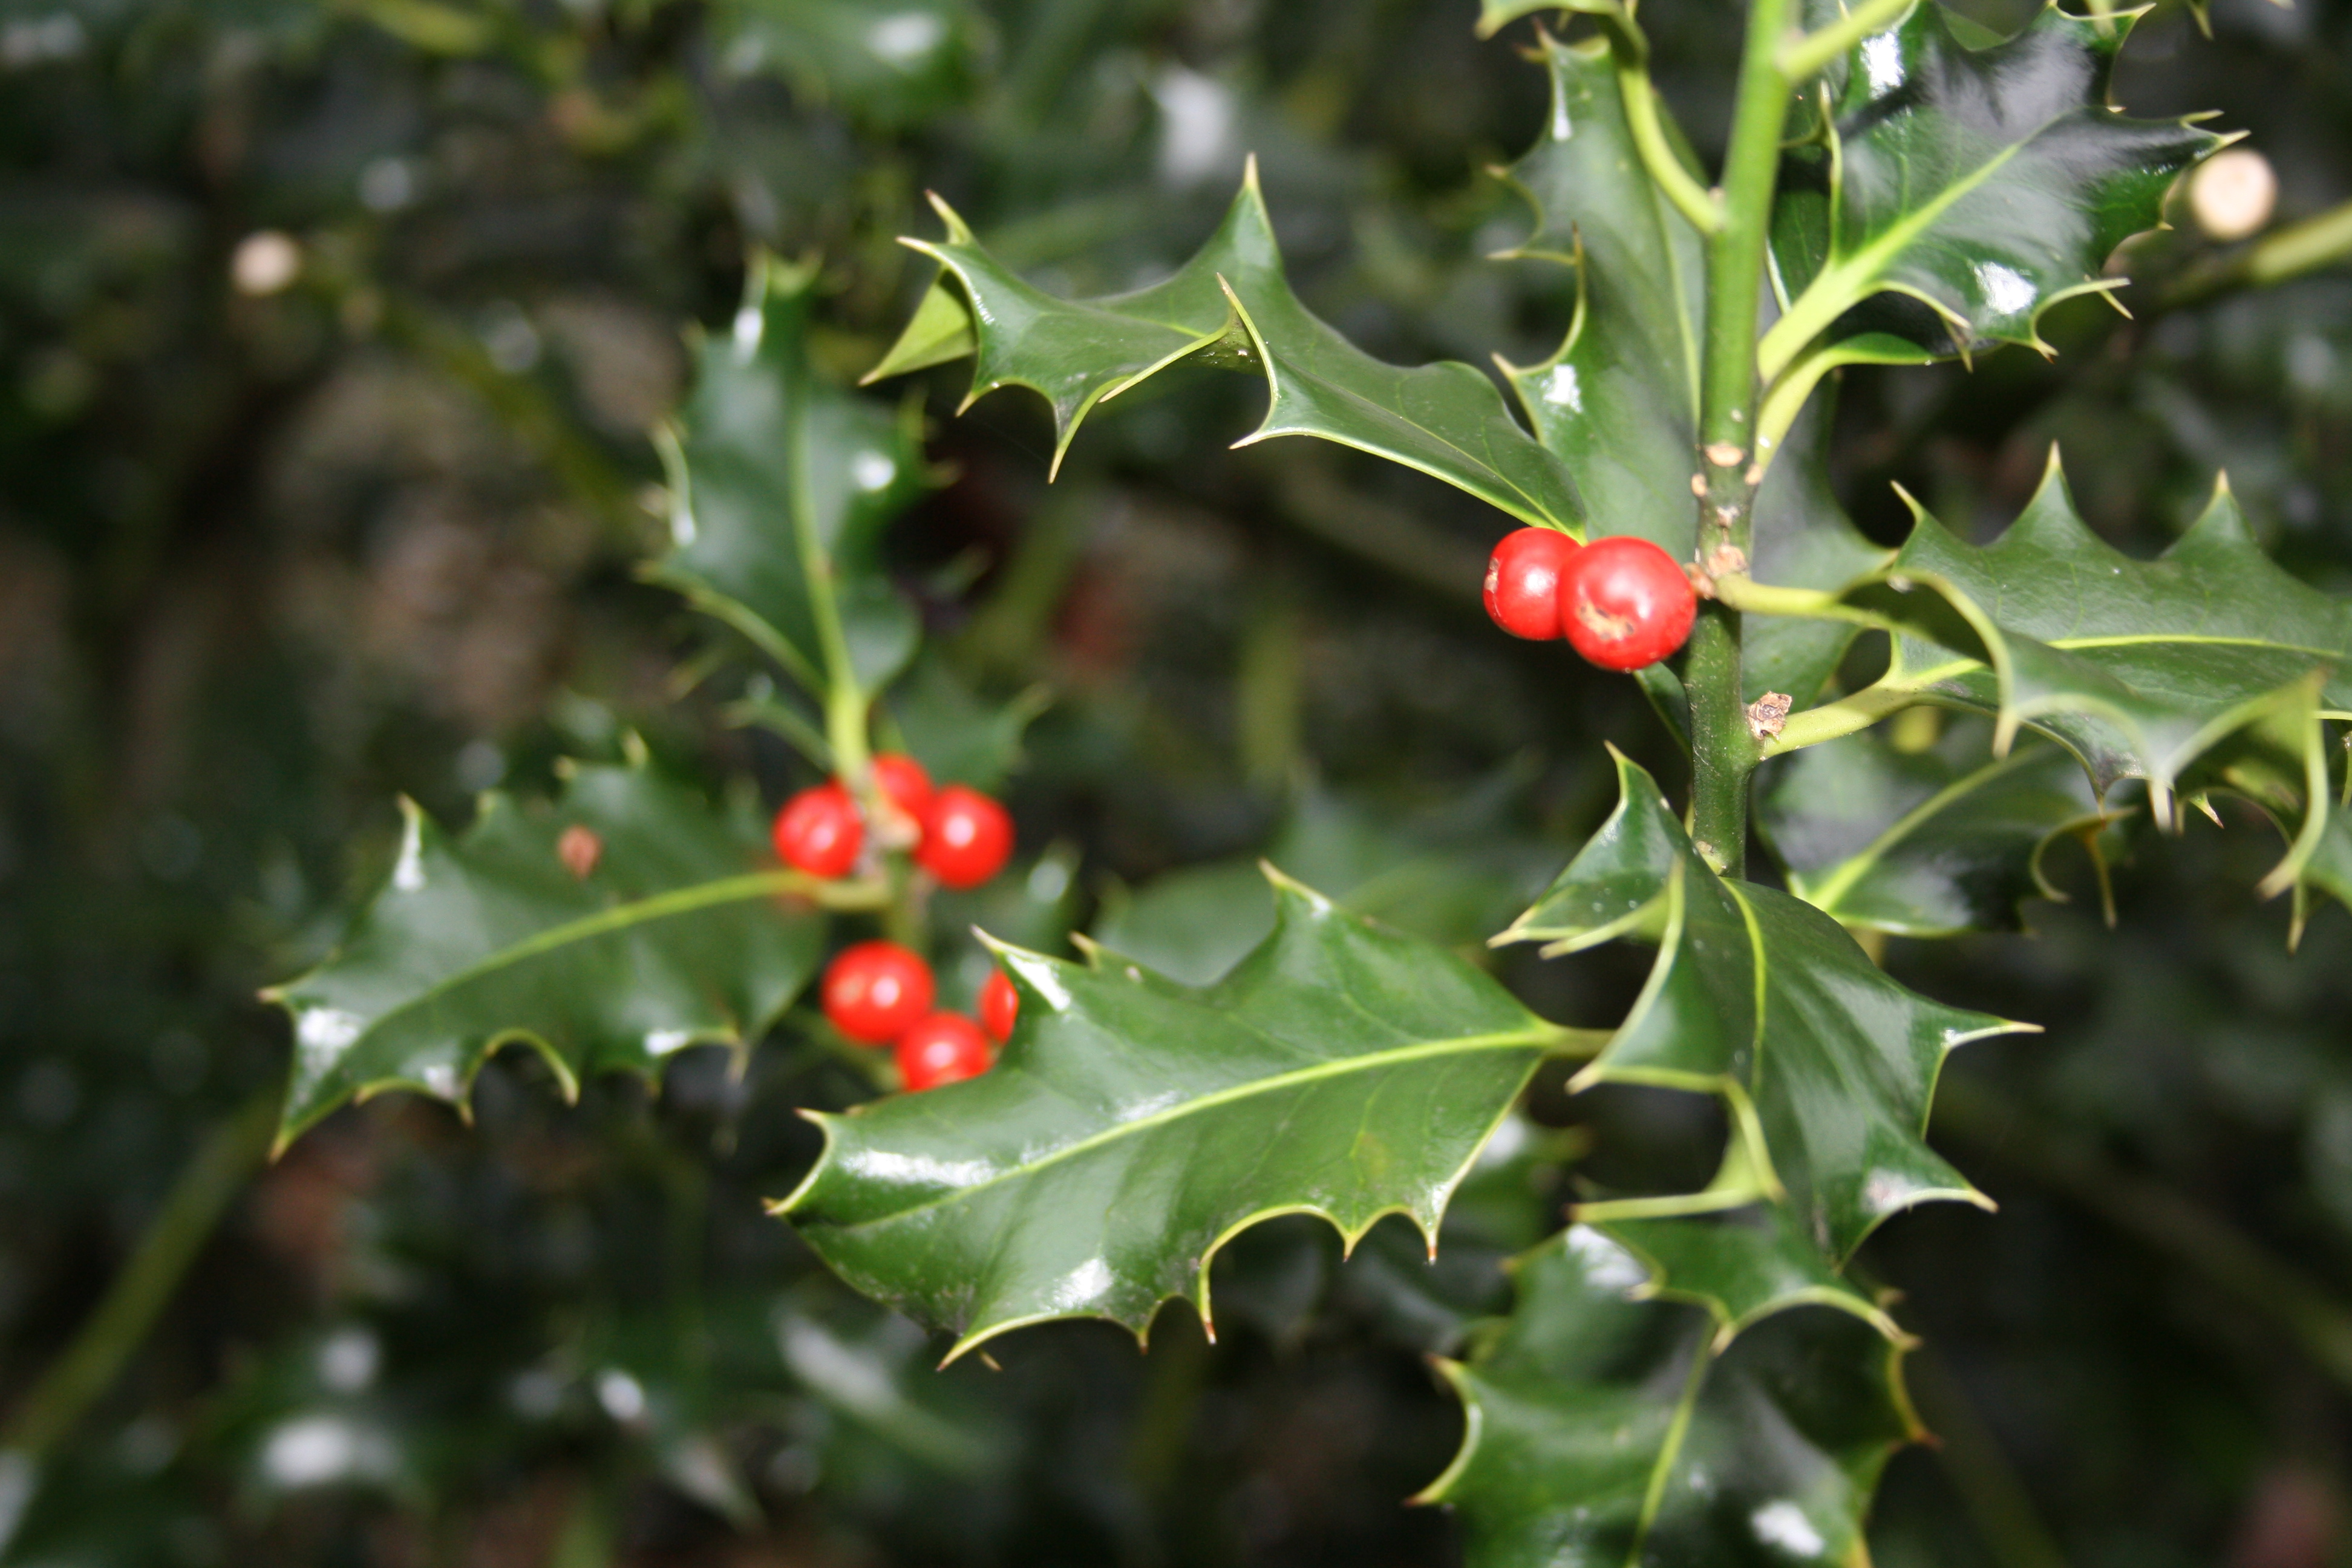 Christmas Holly | The Prior Park Landscape Garden Blog